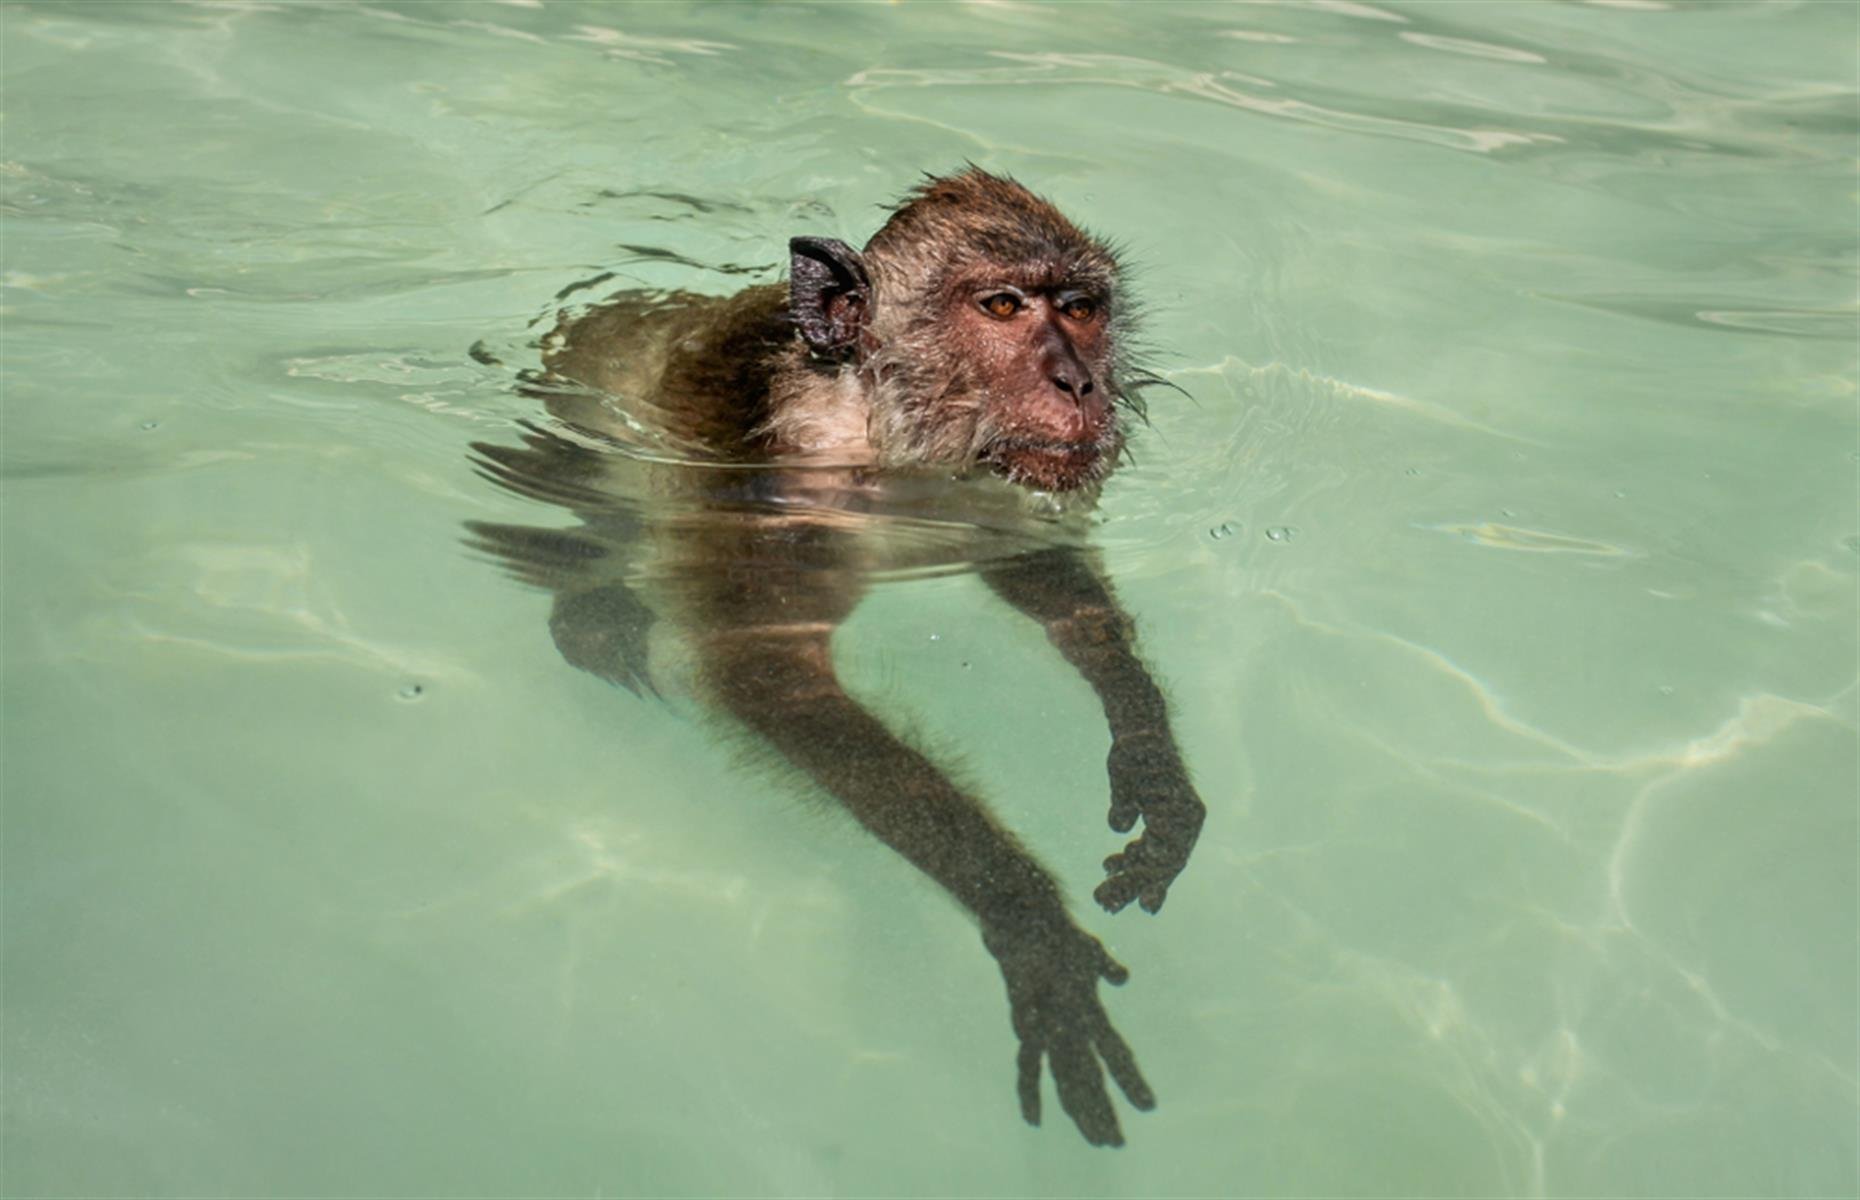 Шимпанзе плавает. Обезьянка в воде. Обезьяна плавает. Обезьяна плывет. Обезьяна купается в море.